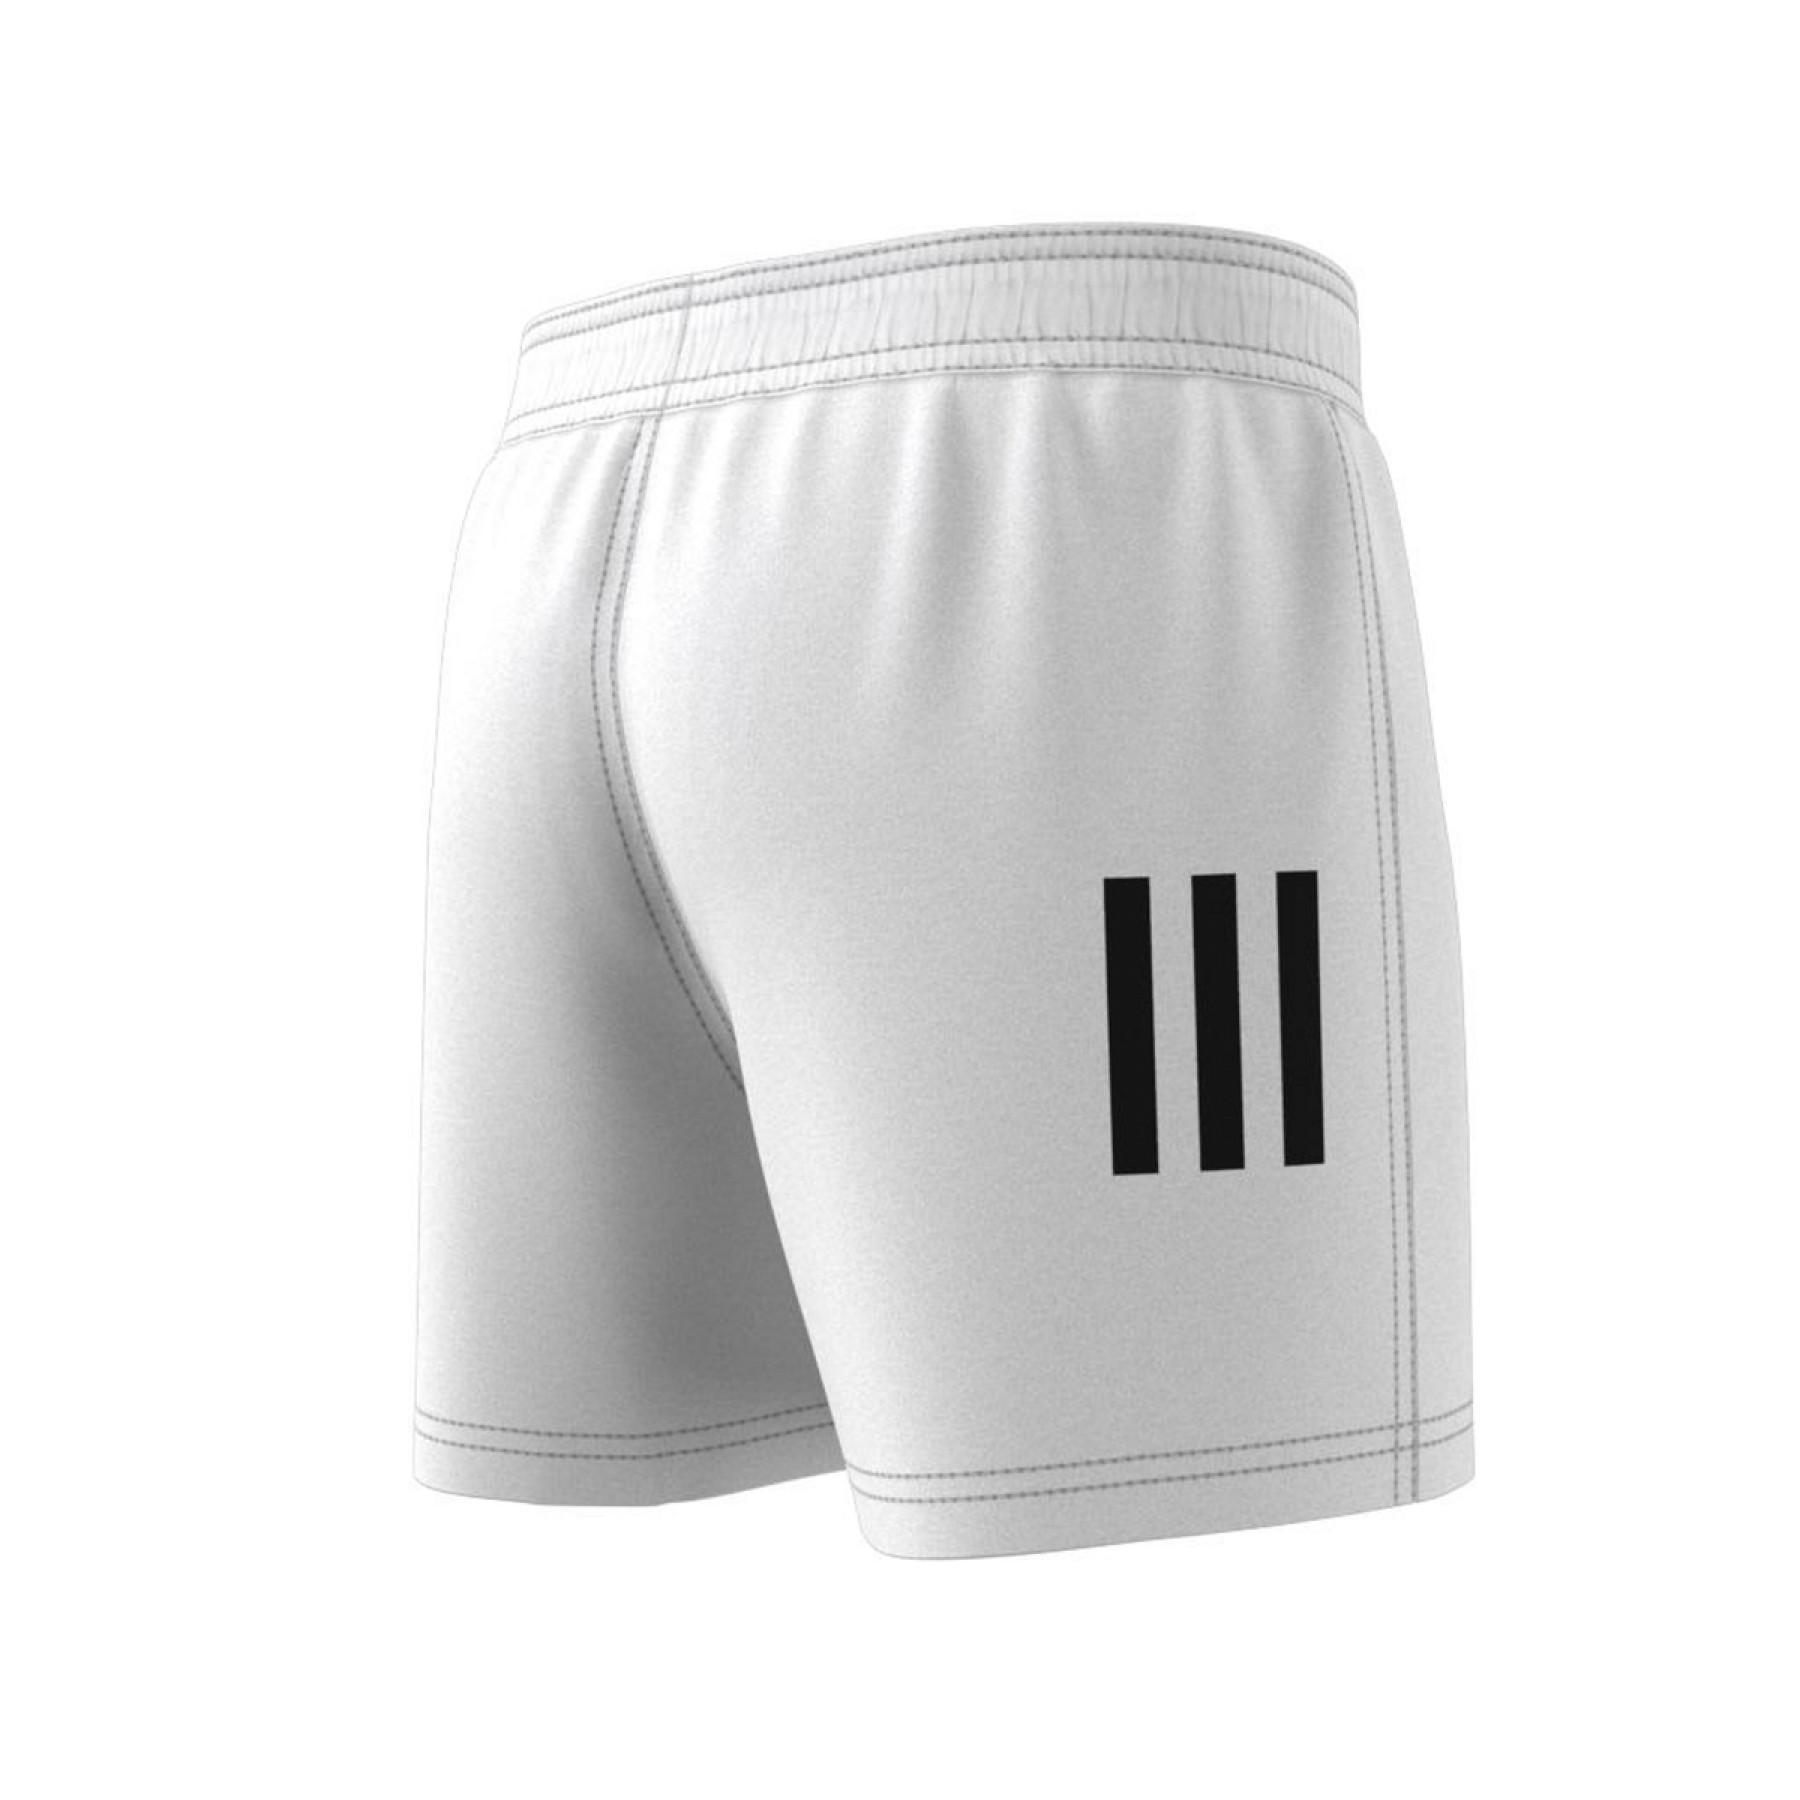 Kinder shorts adidas Rugby 3-Bandes